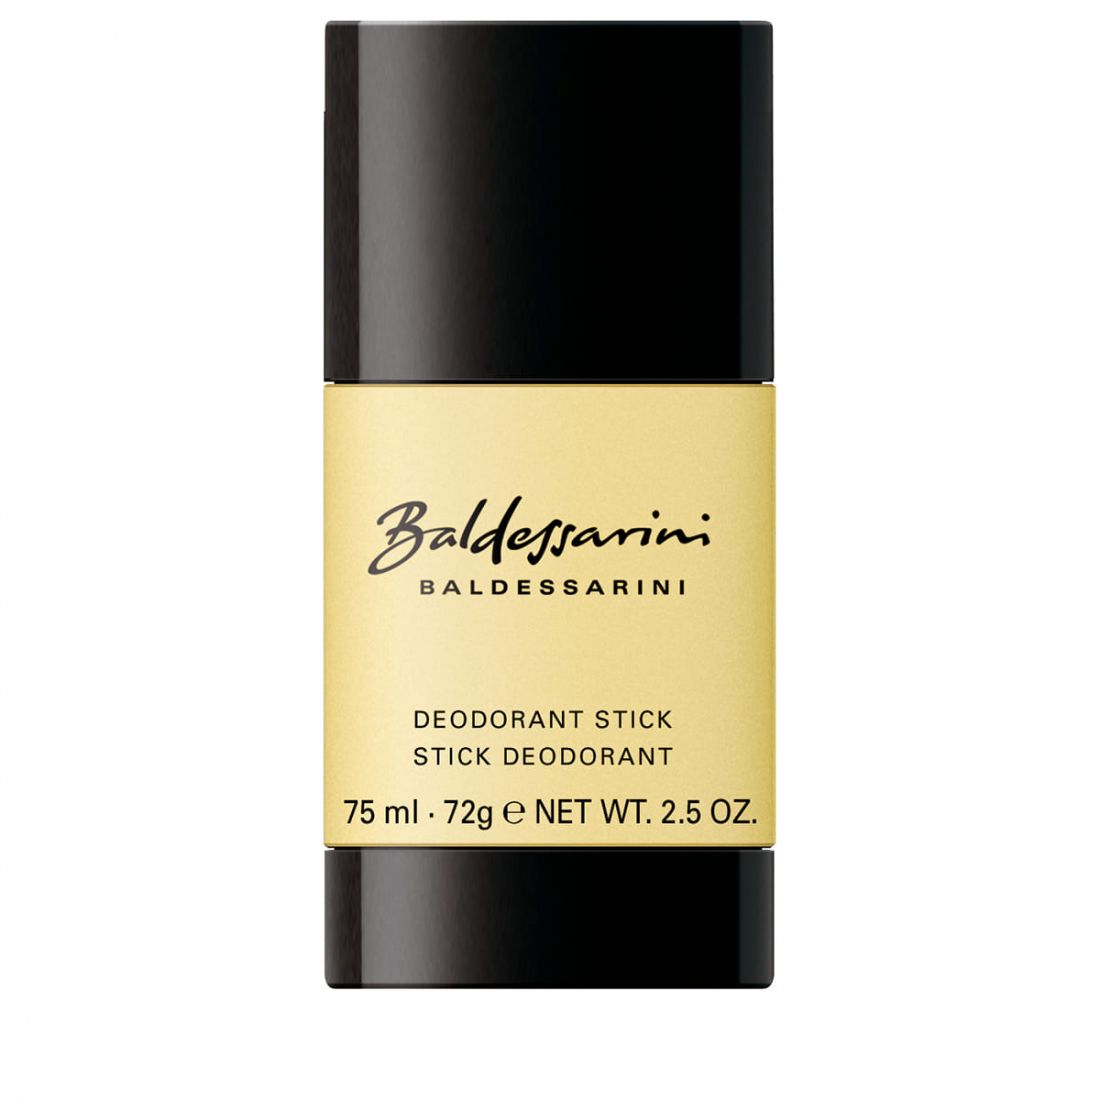 Baldessarini - Déodorant Stick 'Baldessarini' - 75 ml